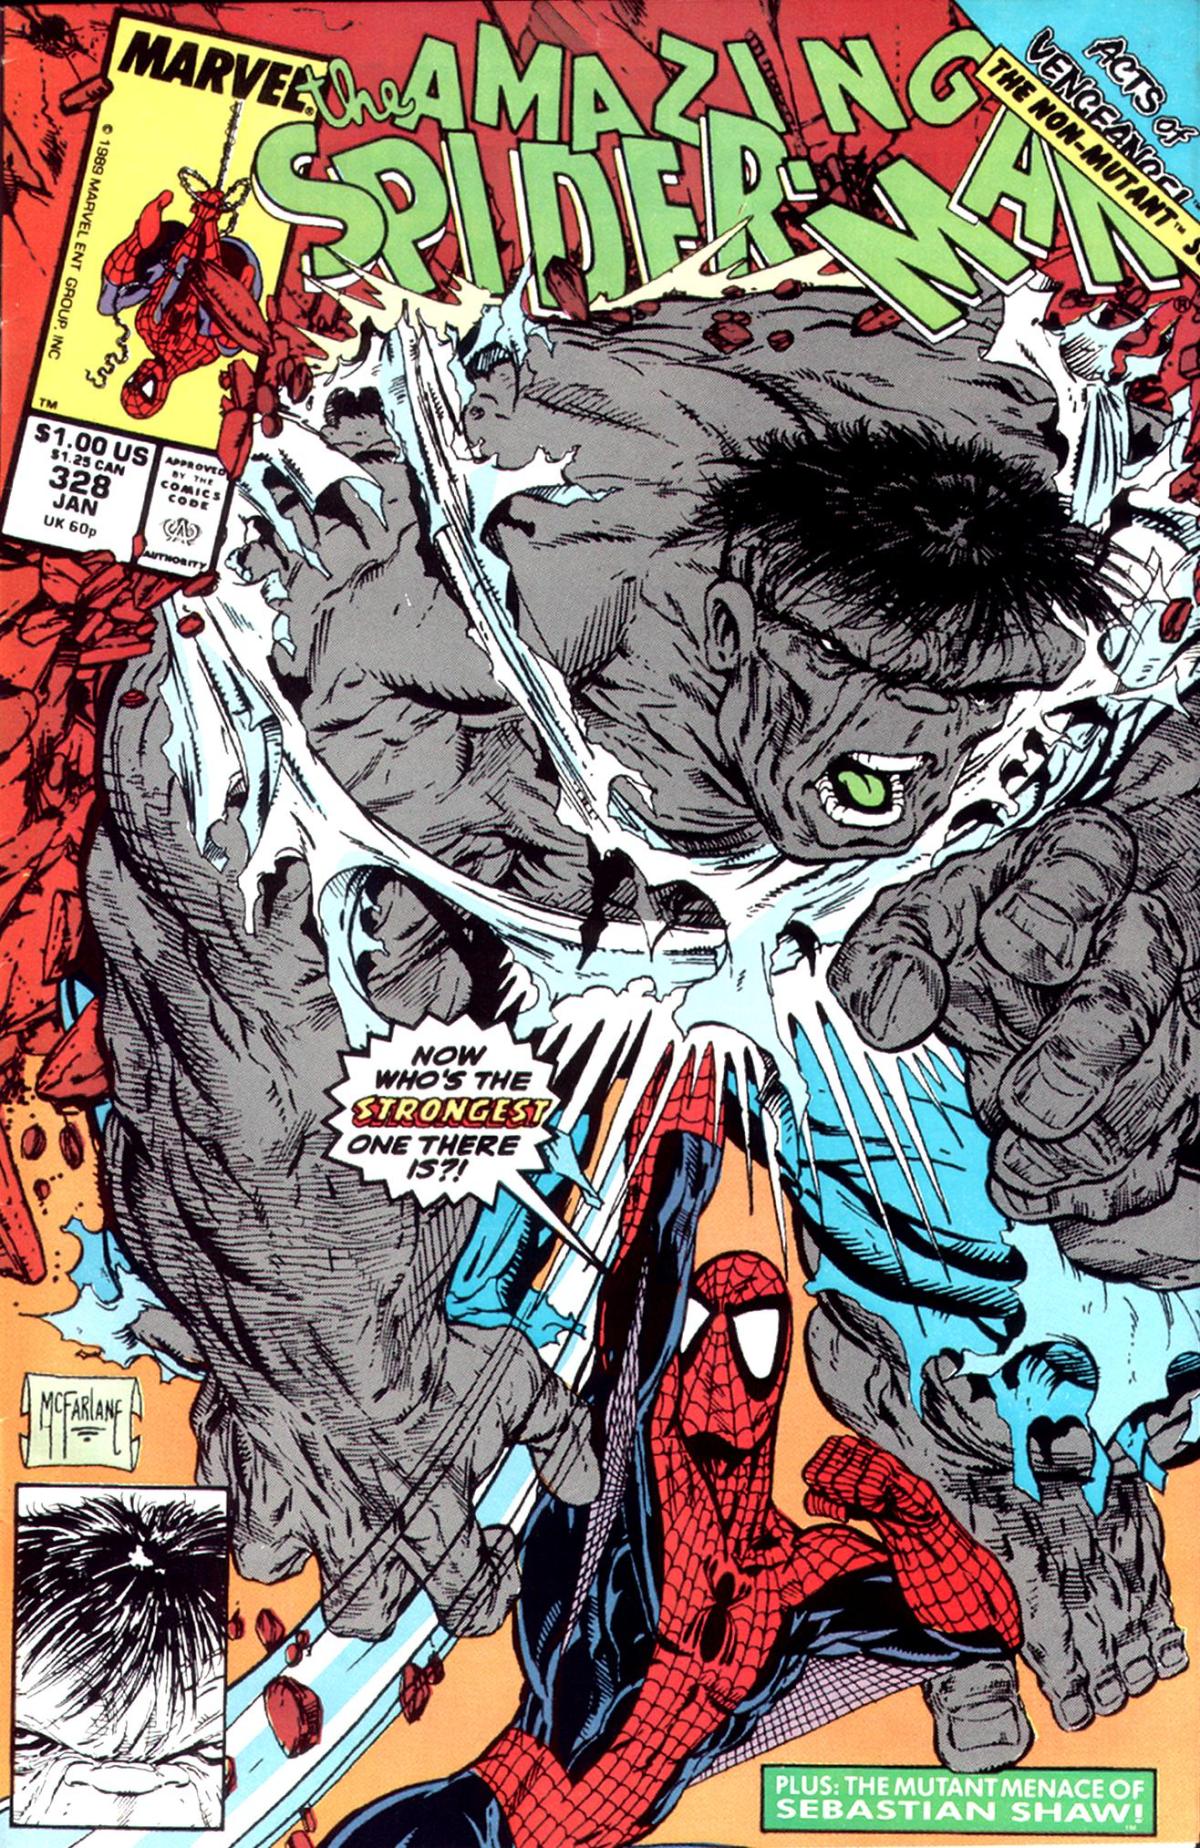 Cosmic Powered Amazing Spider-Man vs. The Incredible Hulk. (Amazing Spider-Man V1 #328, 1989)